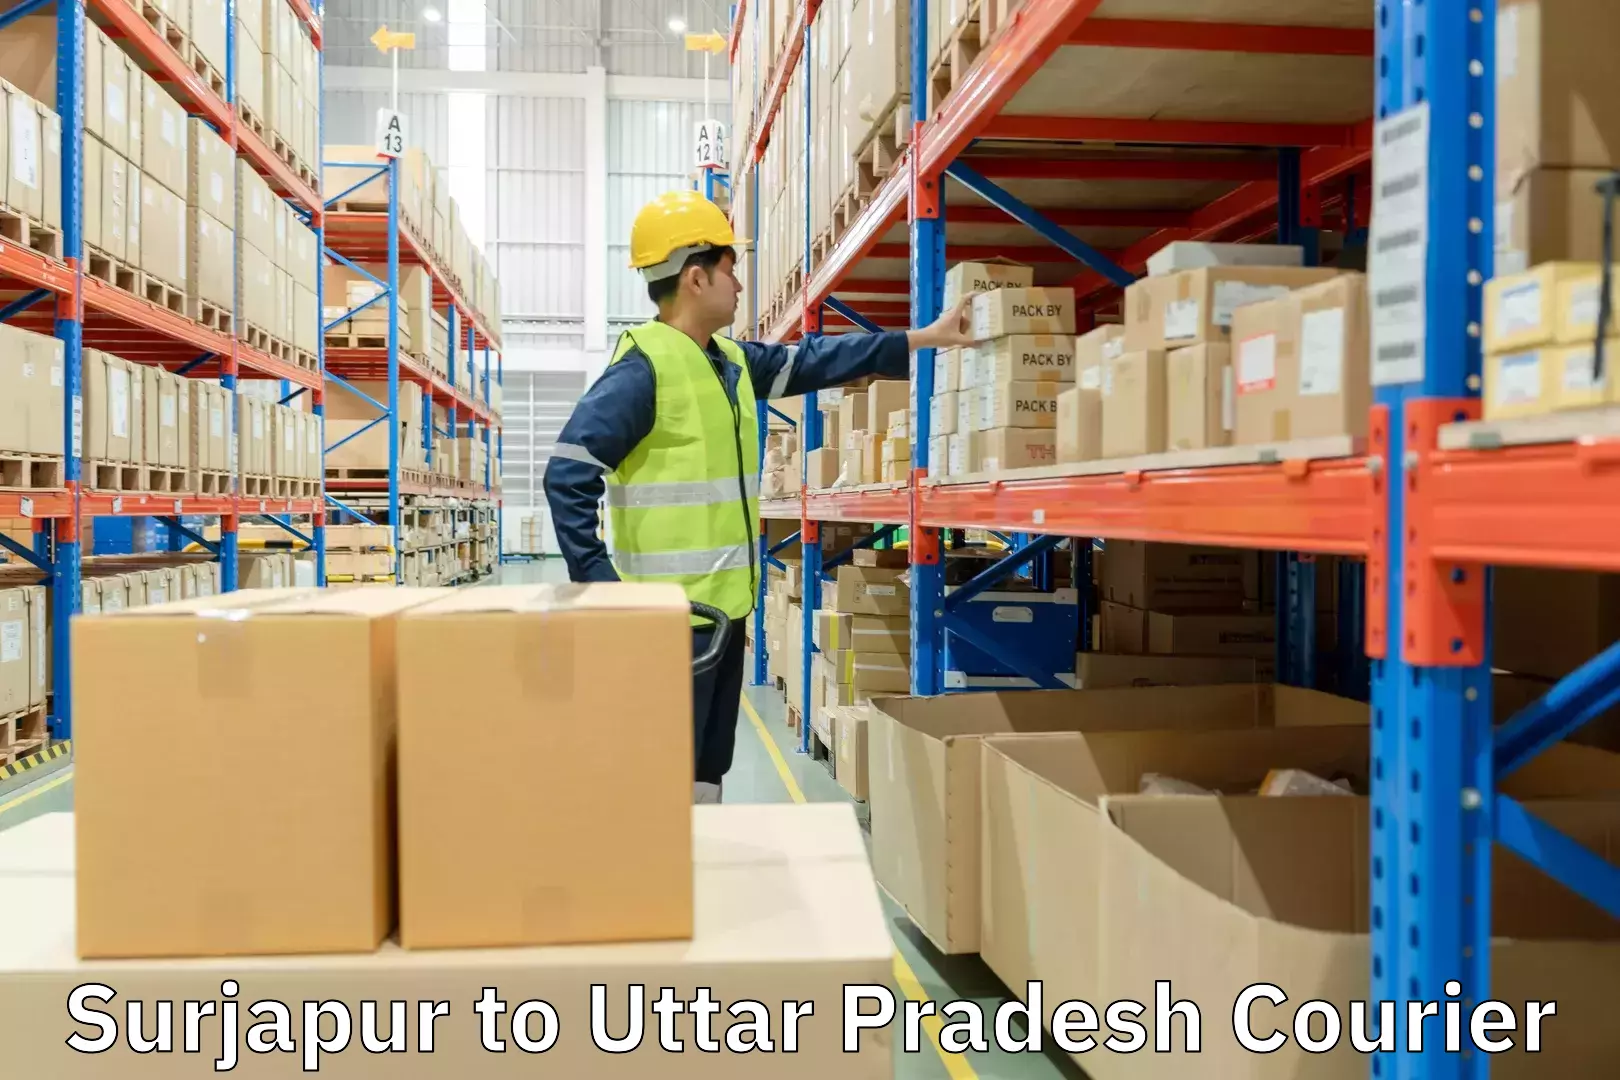 Express delivery capabilities Surjapur to Uttar Pradesh